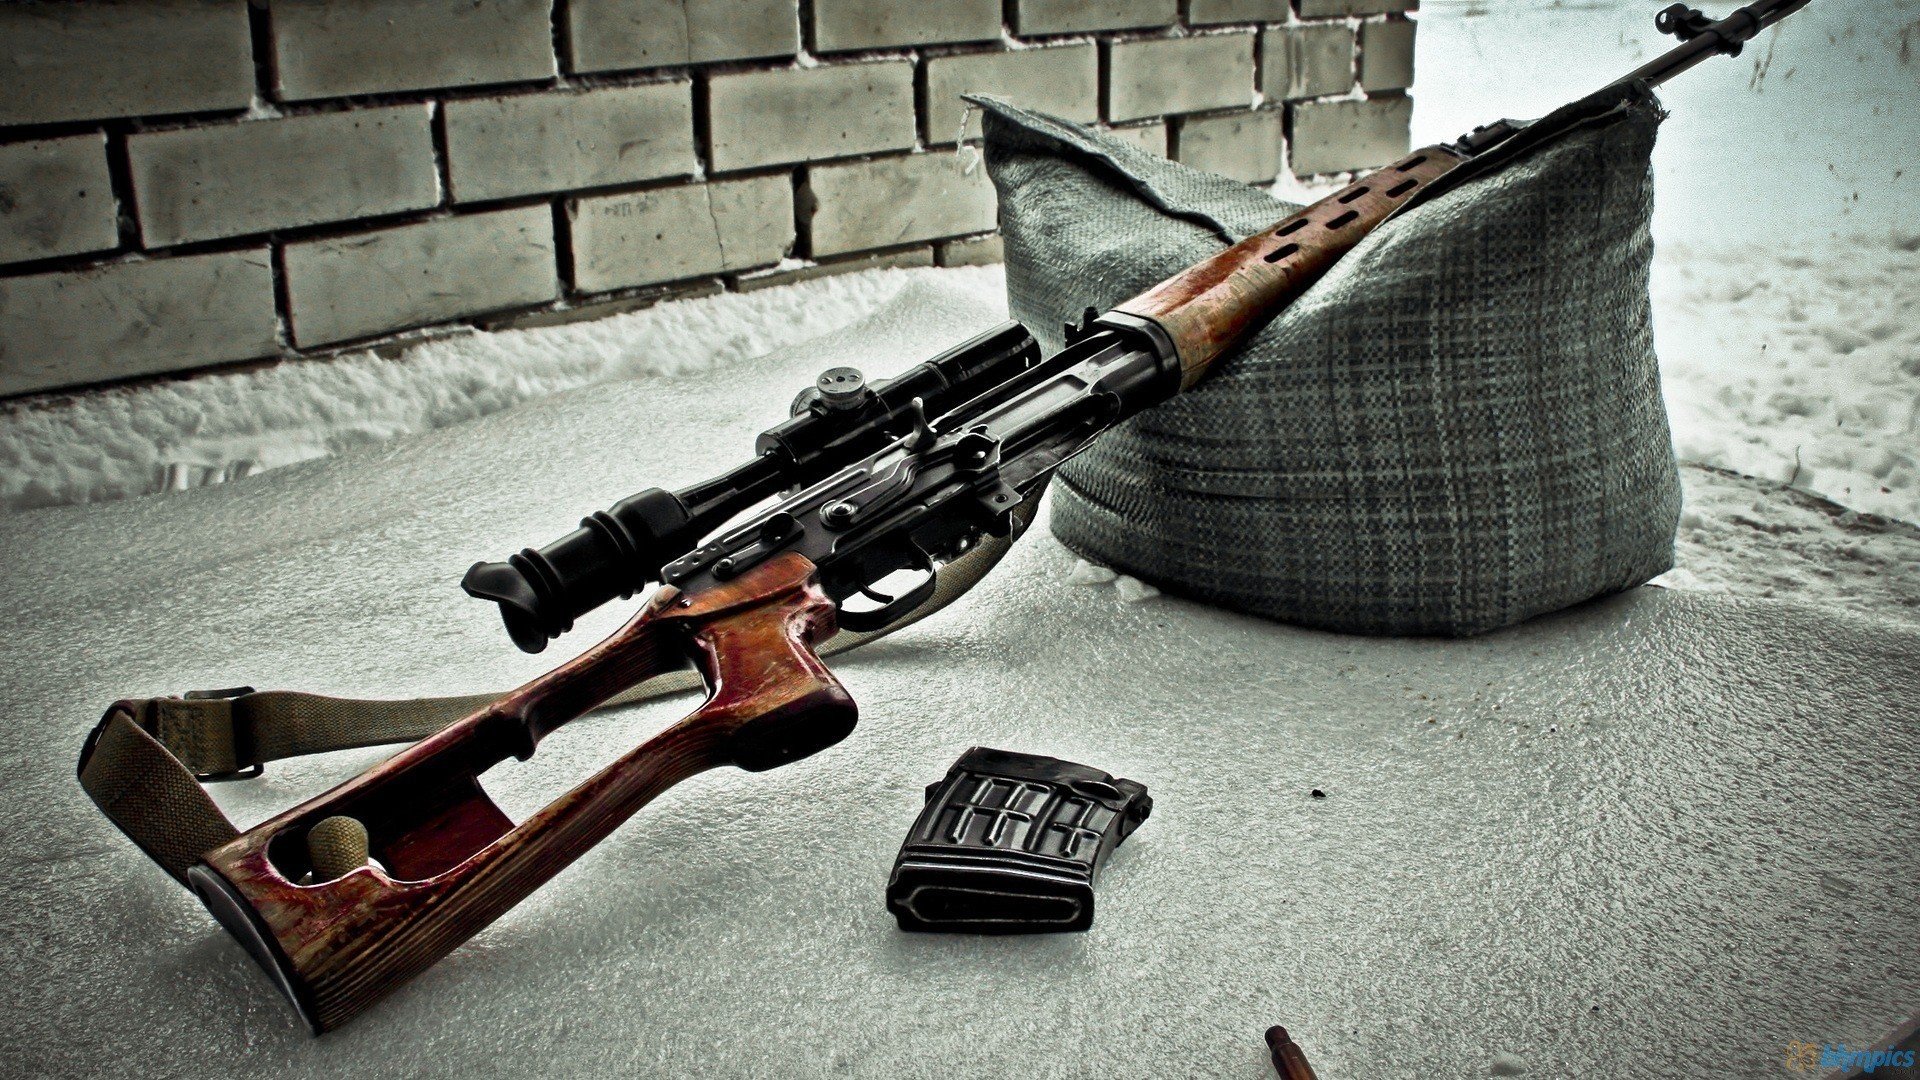 Free Download Sniper Rifle Wallpaper Id282987 Full Hd 1080p For Desktop